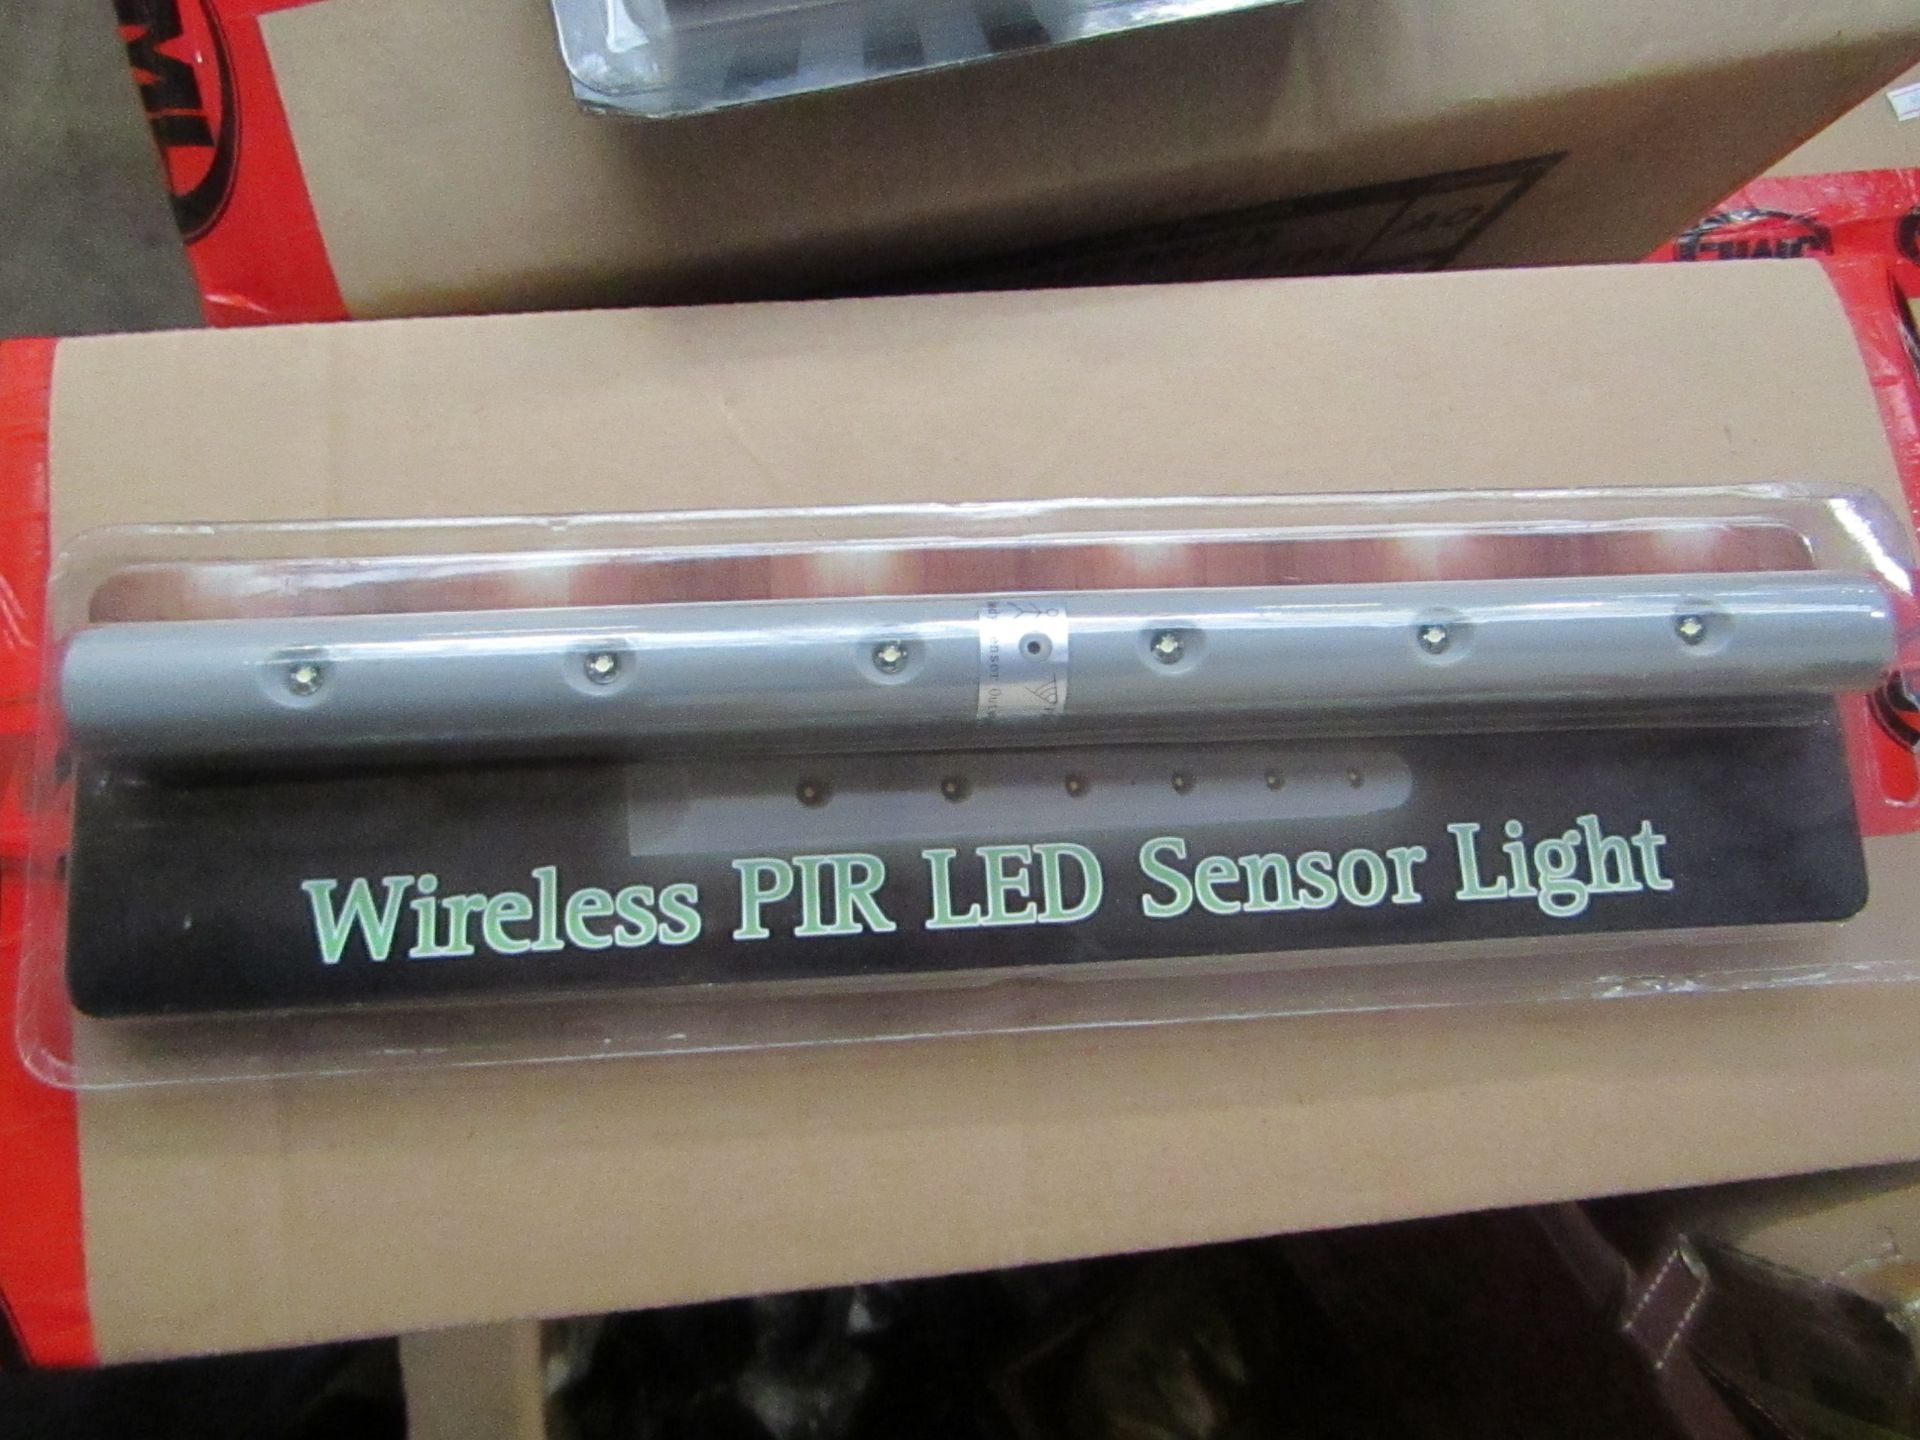 10 x of wireless PIR LED sensor lights , packaged.